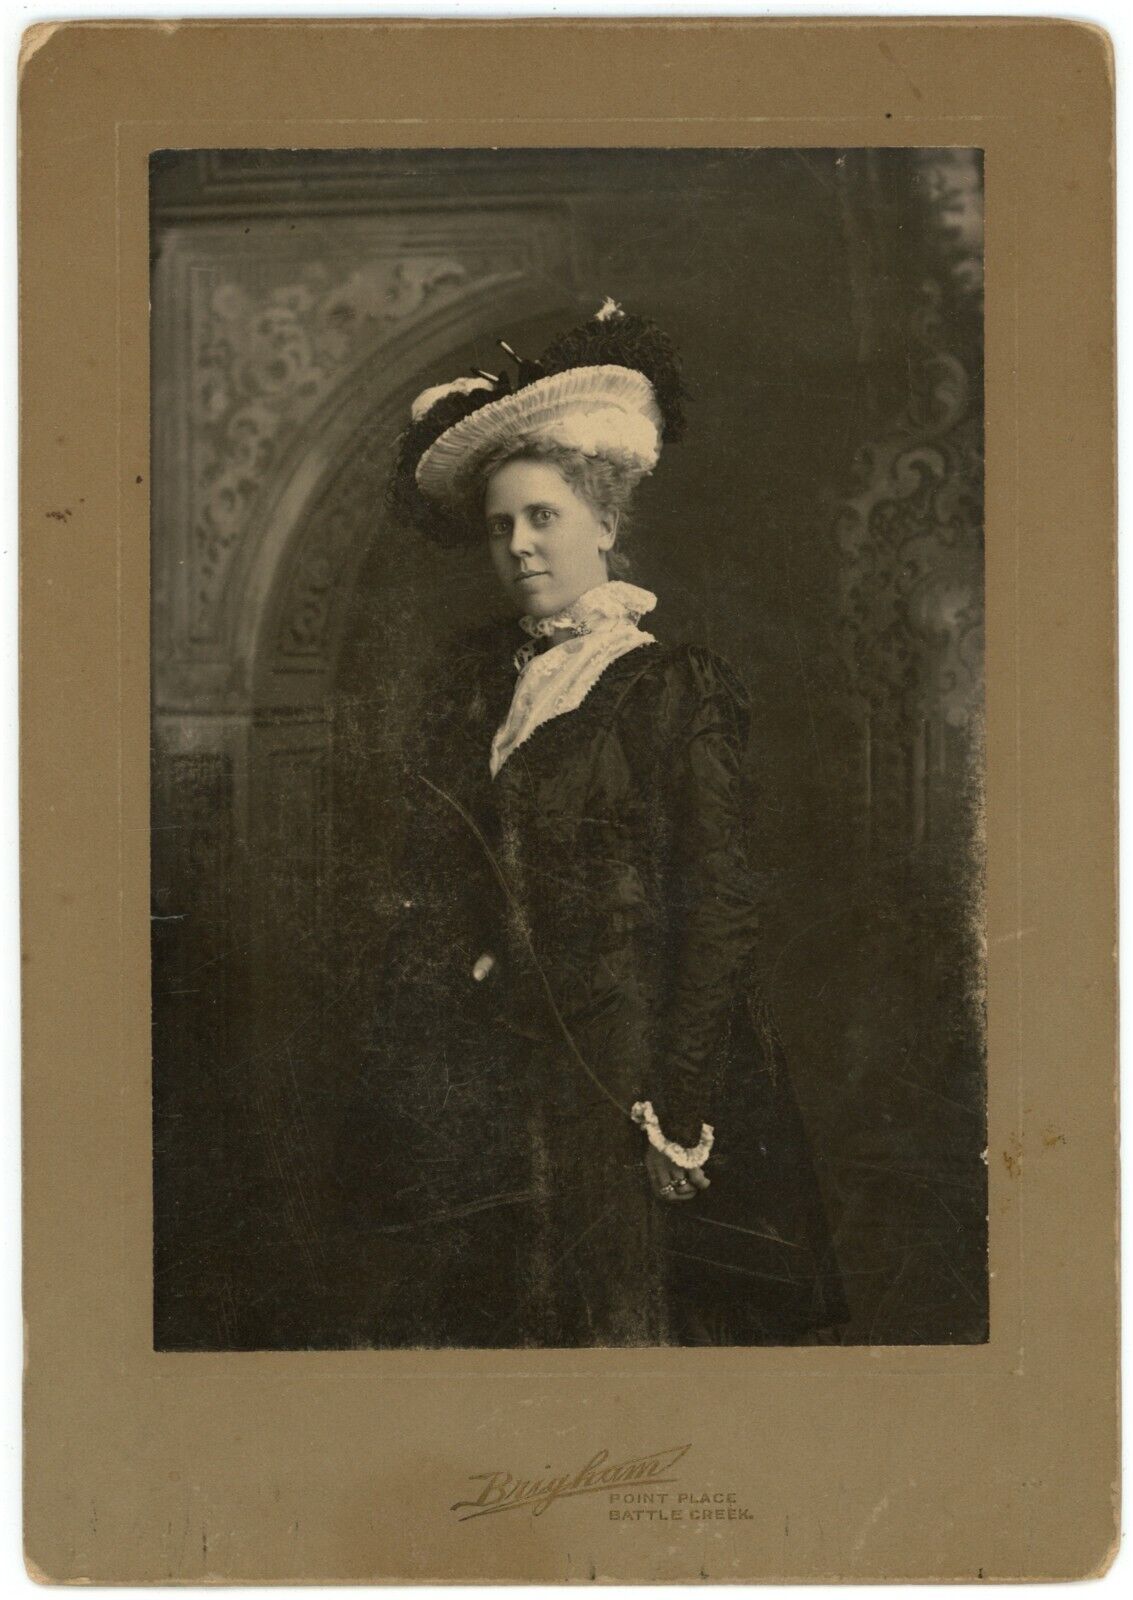 Antique Circa 1880s Cabinet Card Brigham Beautiful Woman in Hat Battle Creek, MI